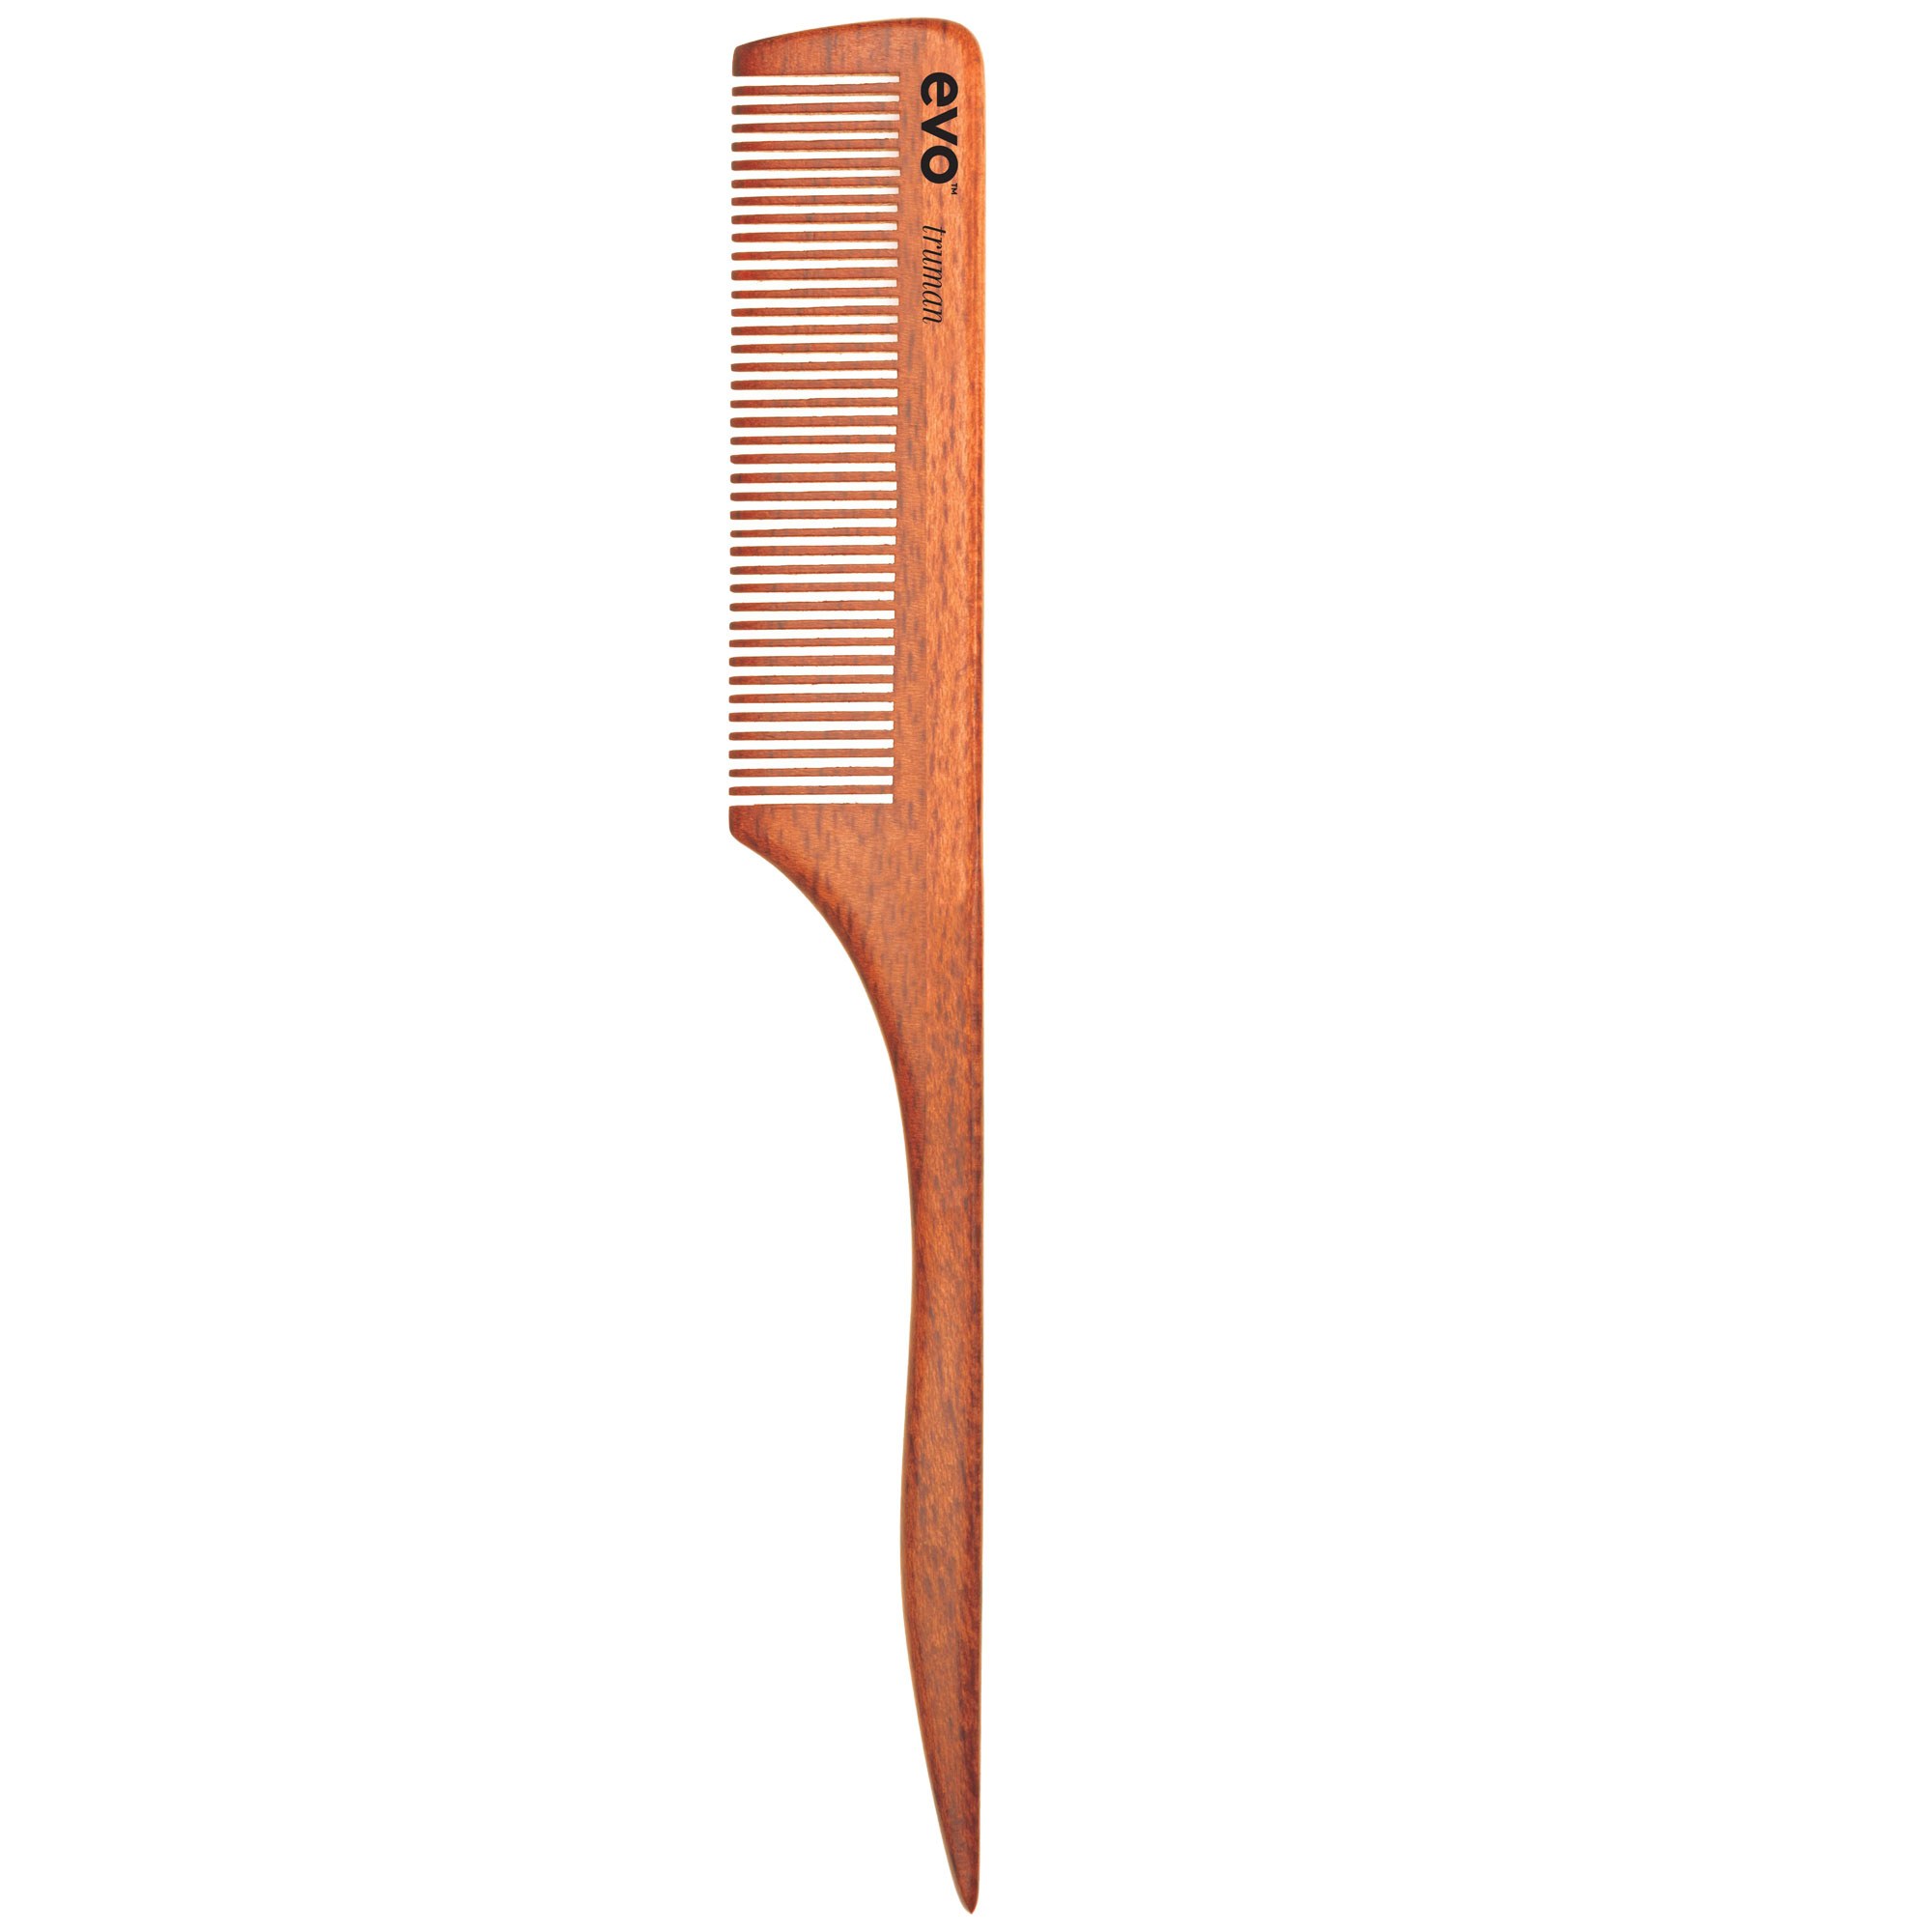 evo combs: truman tail comb